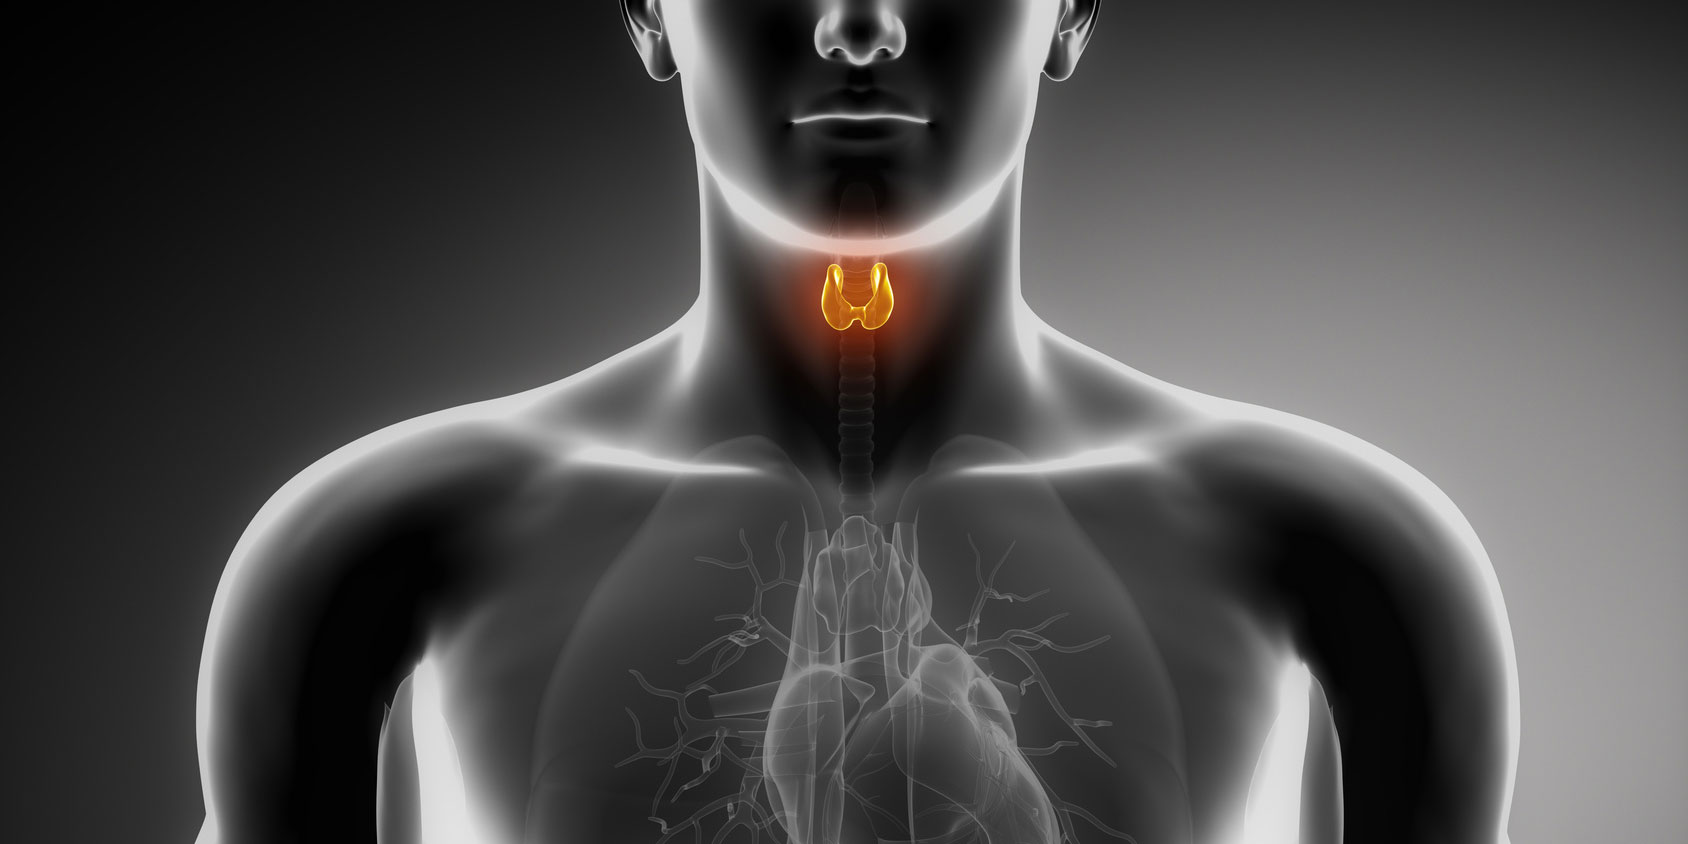 FDA Attacks Natural Thyroid